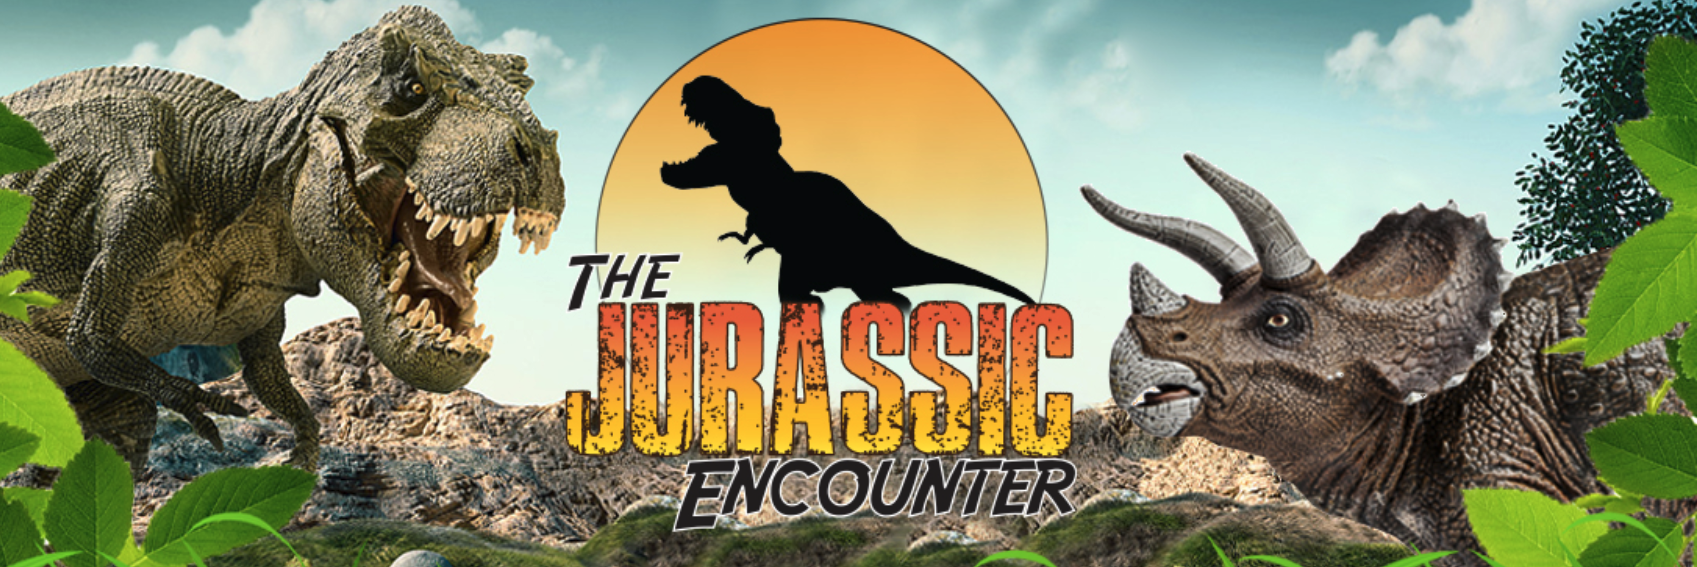 Jurassic Encounter returns to Bull Run Events Center, Headlines